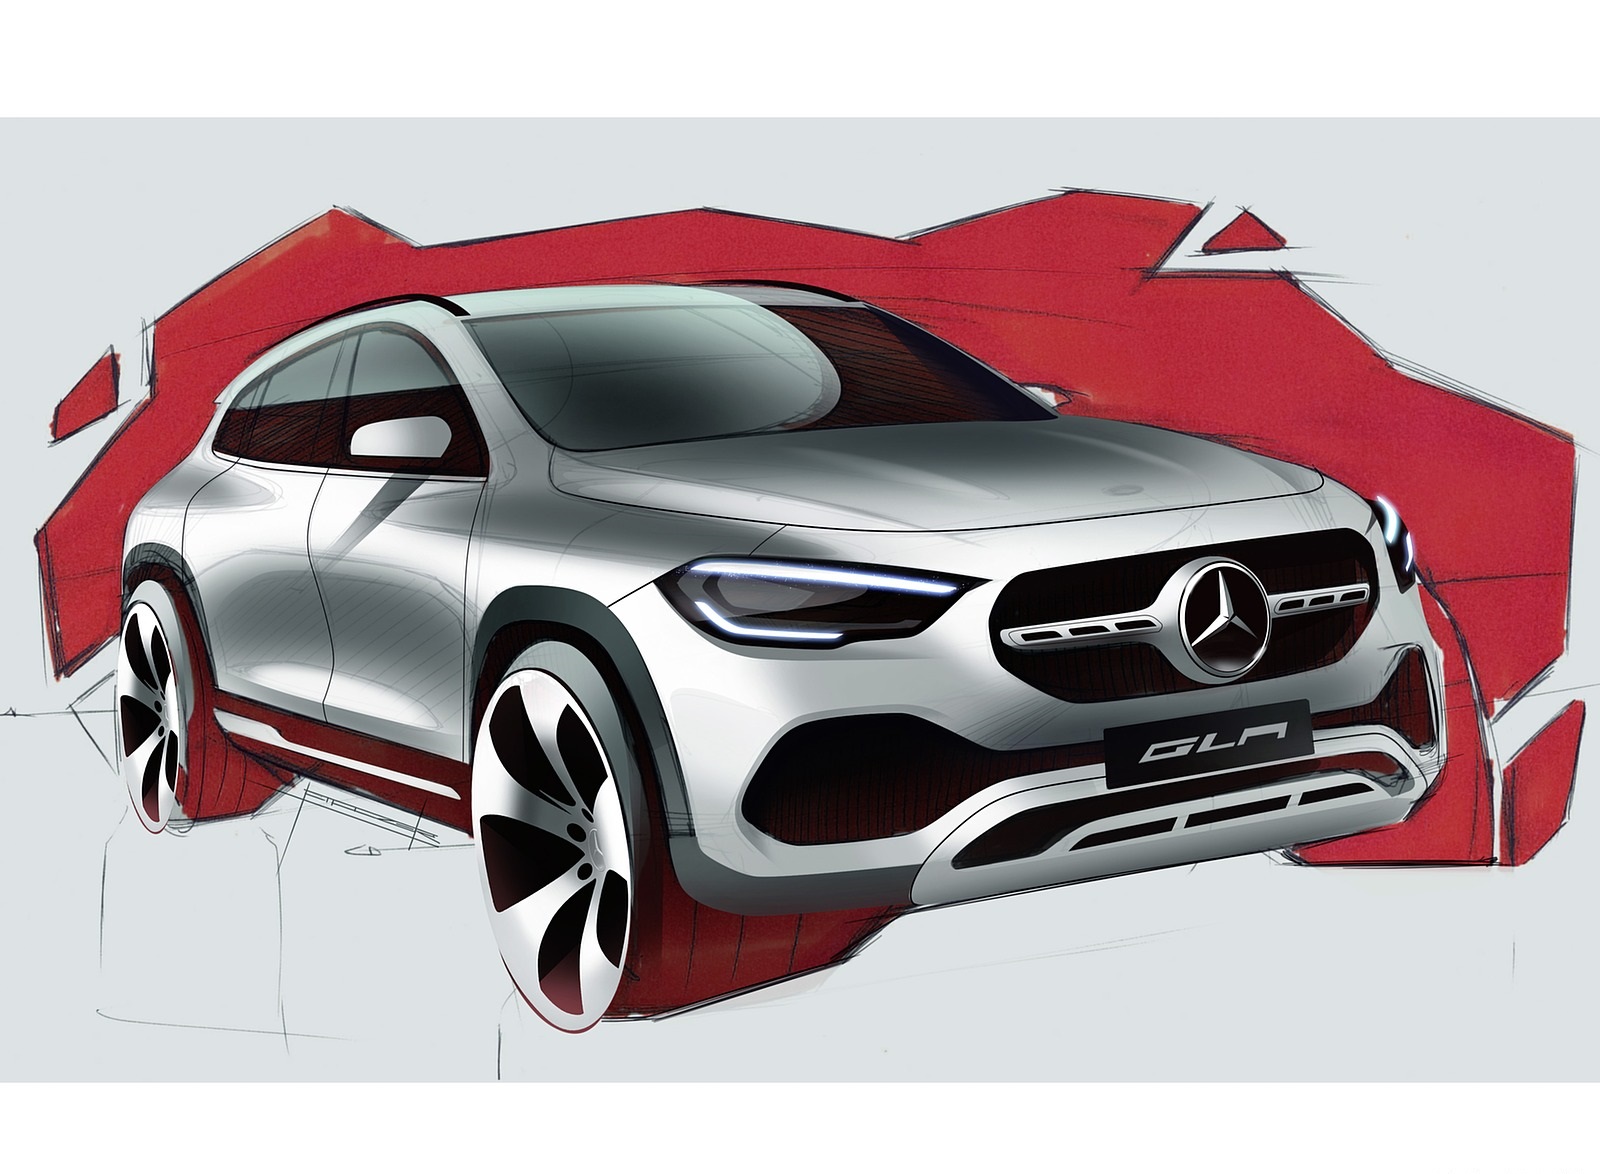 2021 Mercedes-Benz GLA Design Sketch Wallpapers #114 of 115